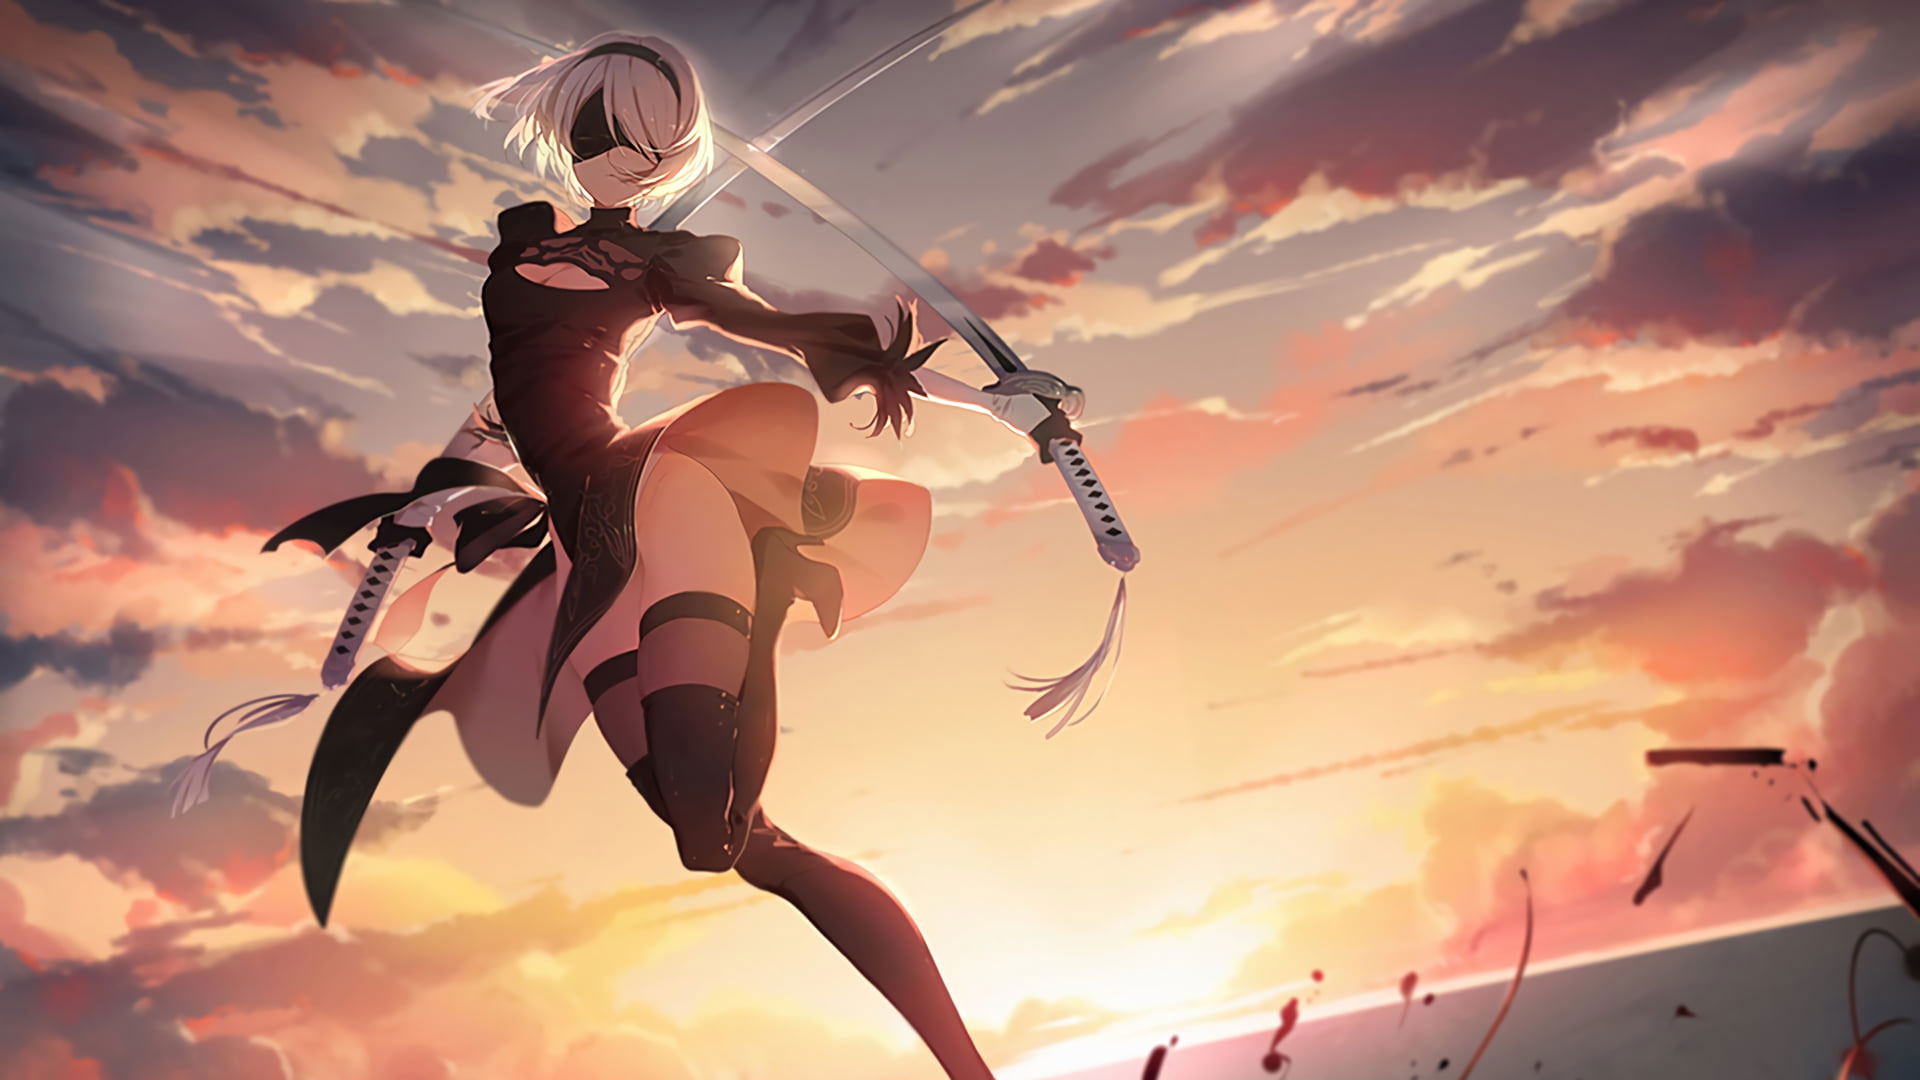 Wallpaper Nier, Gray Haired Woman Holding Sword Illustration, Nier: Automata, Anime